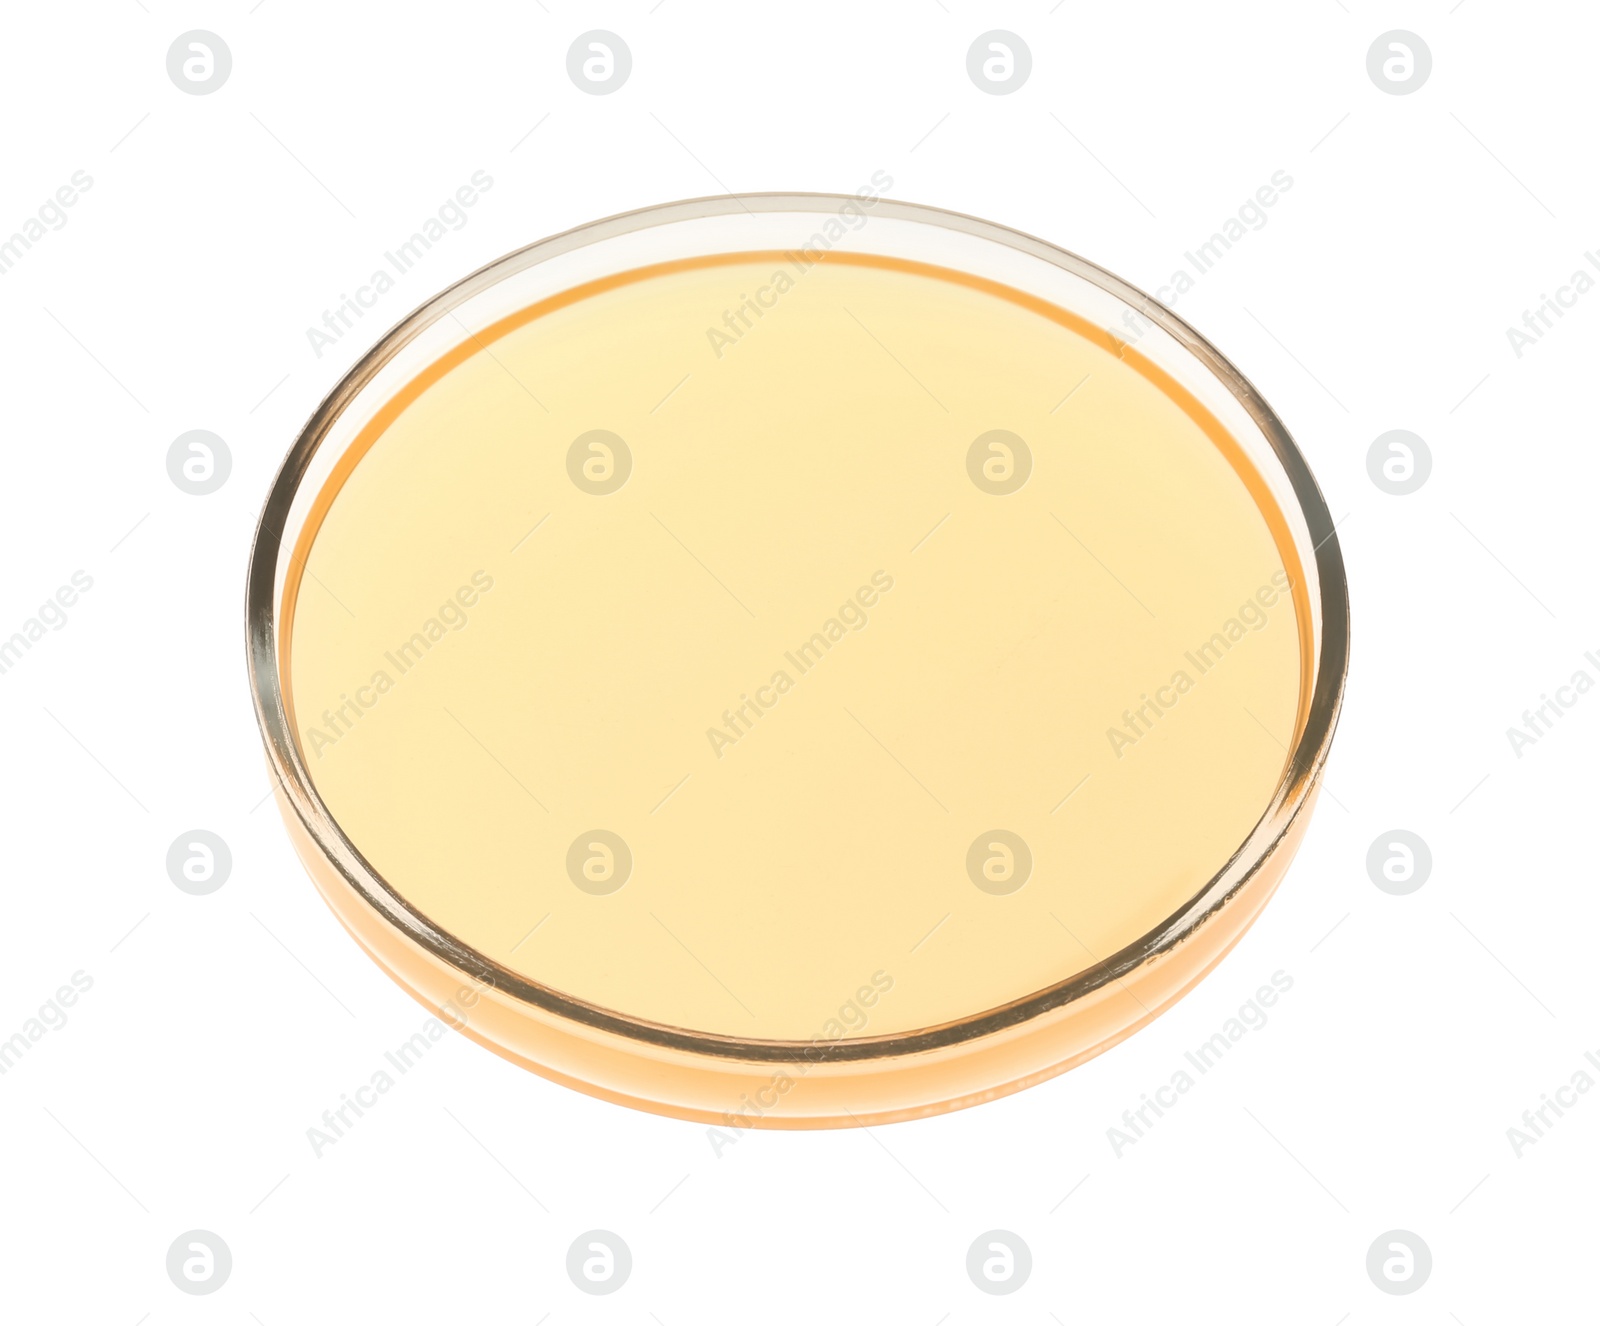 Photo of Petri dish with orange liquid isolated on white